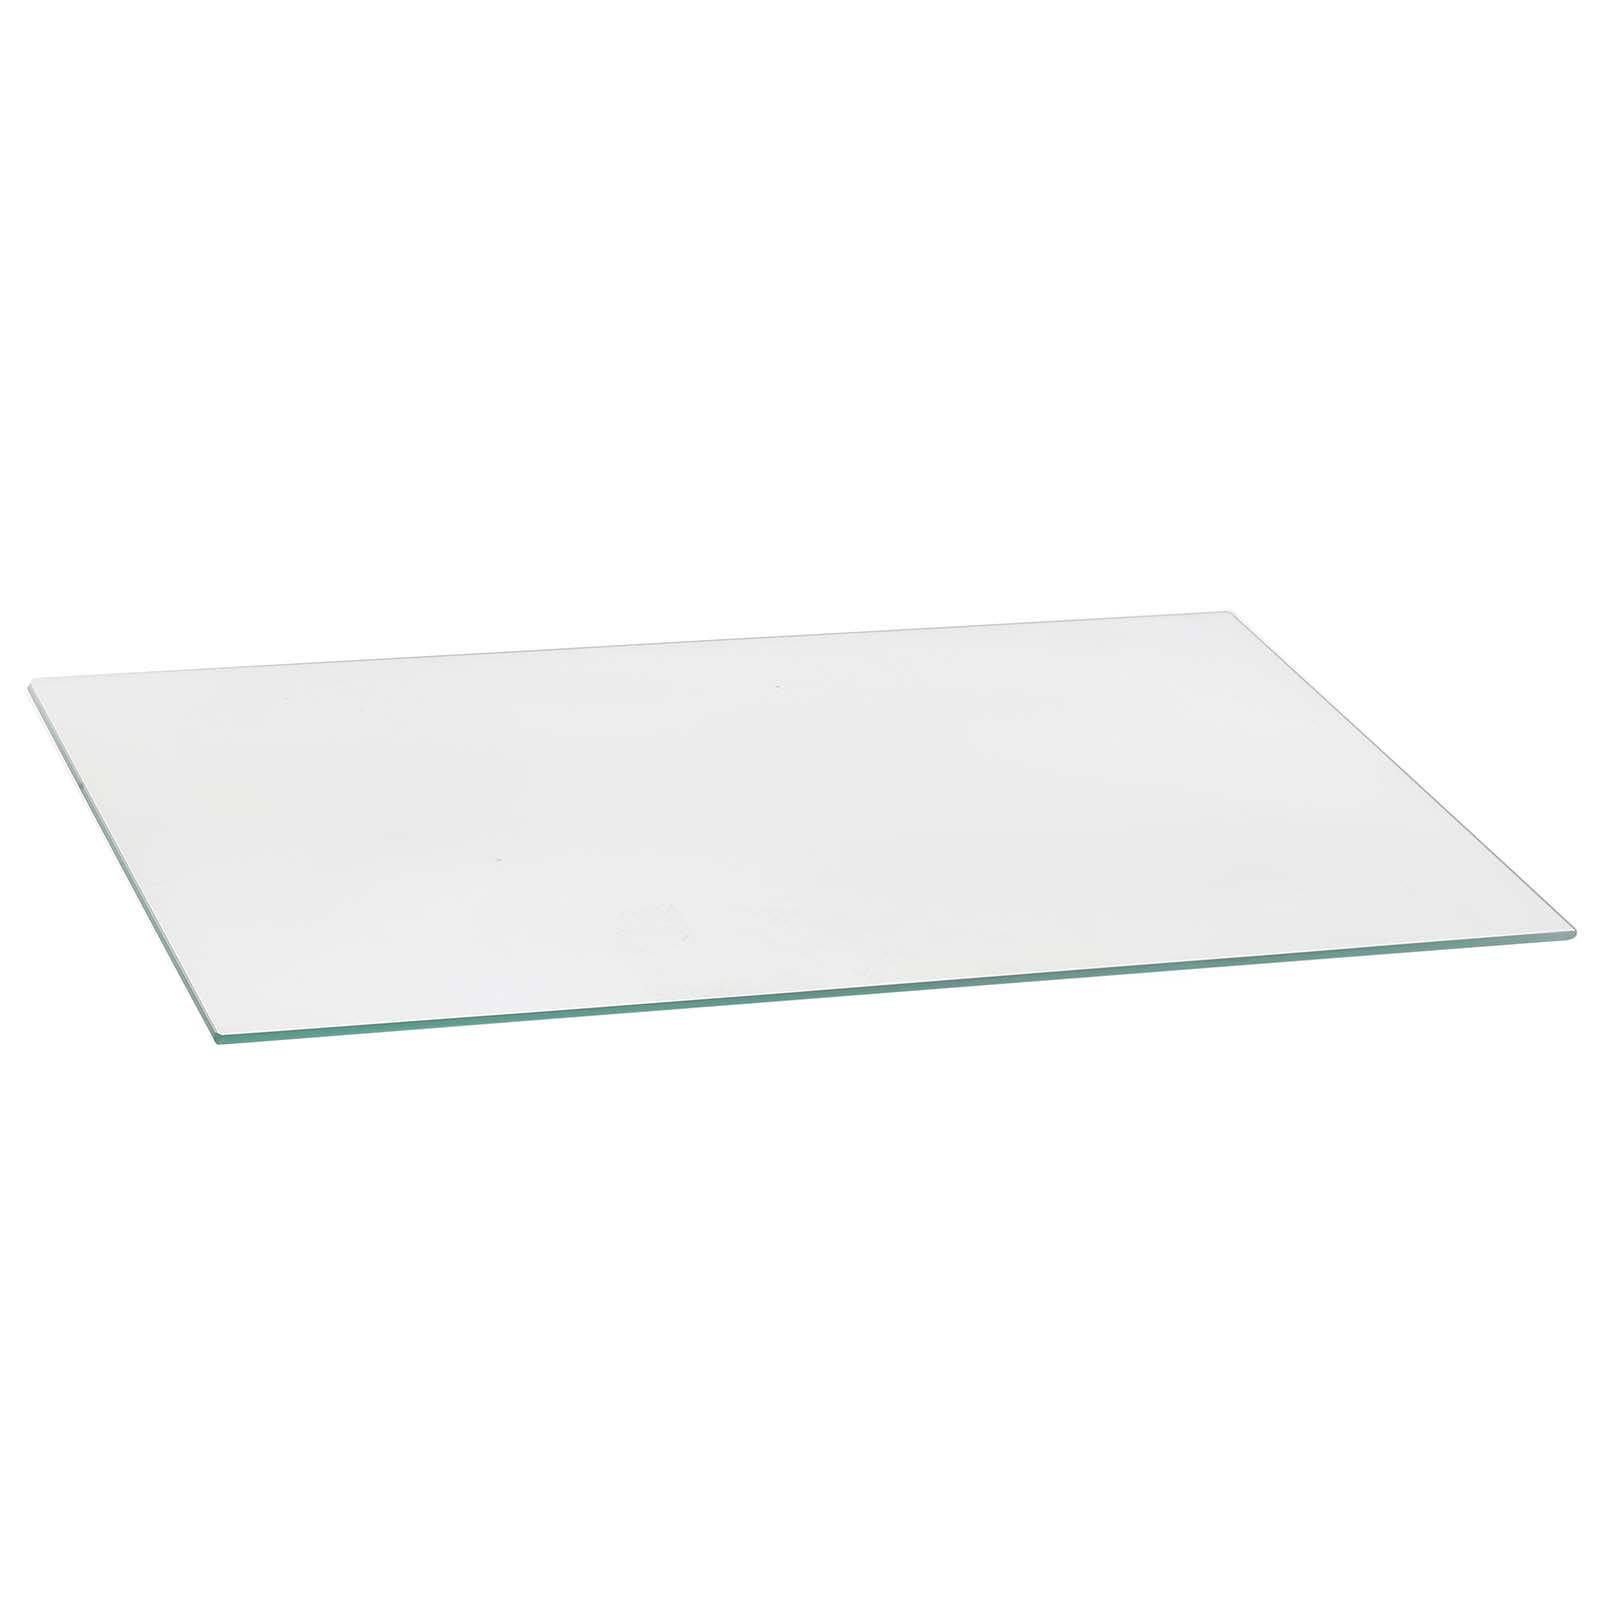 Beko Fridge Glass Shelf - 447mm x 300mm x 4mm 4656270100